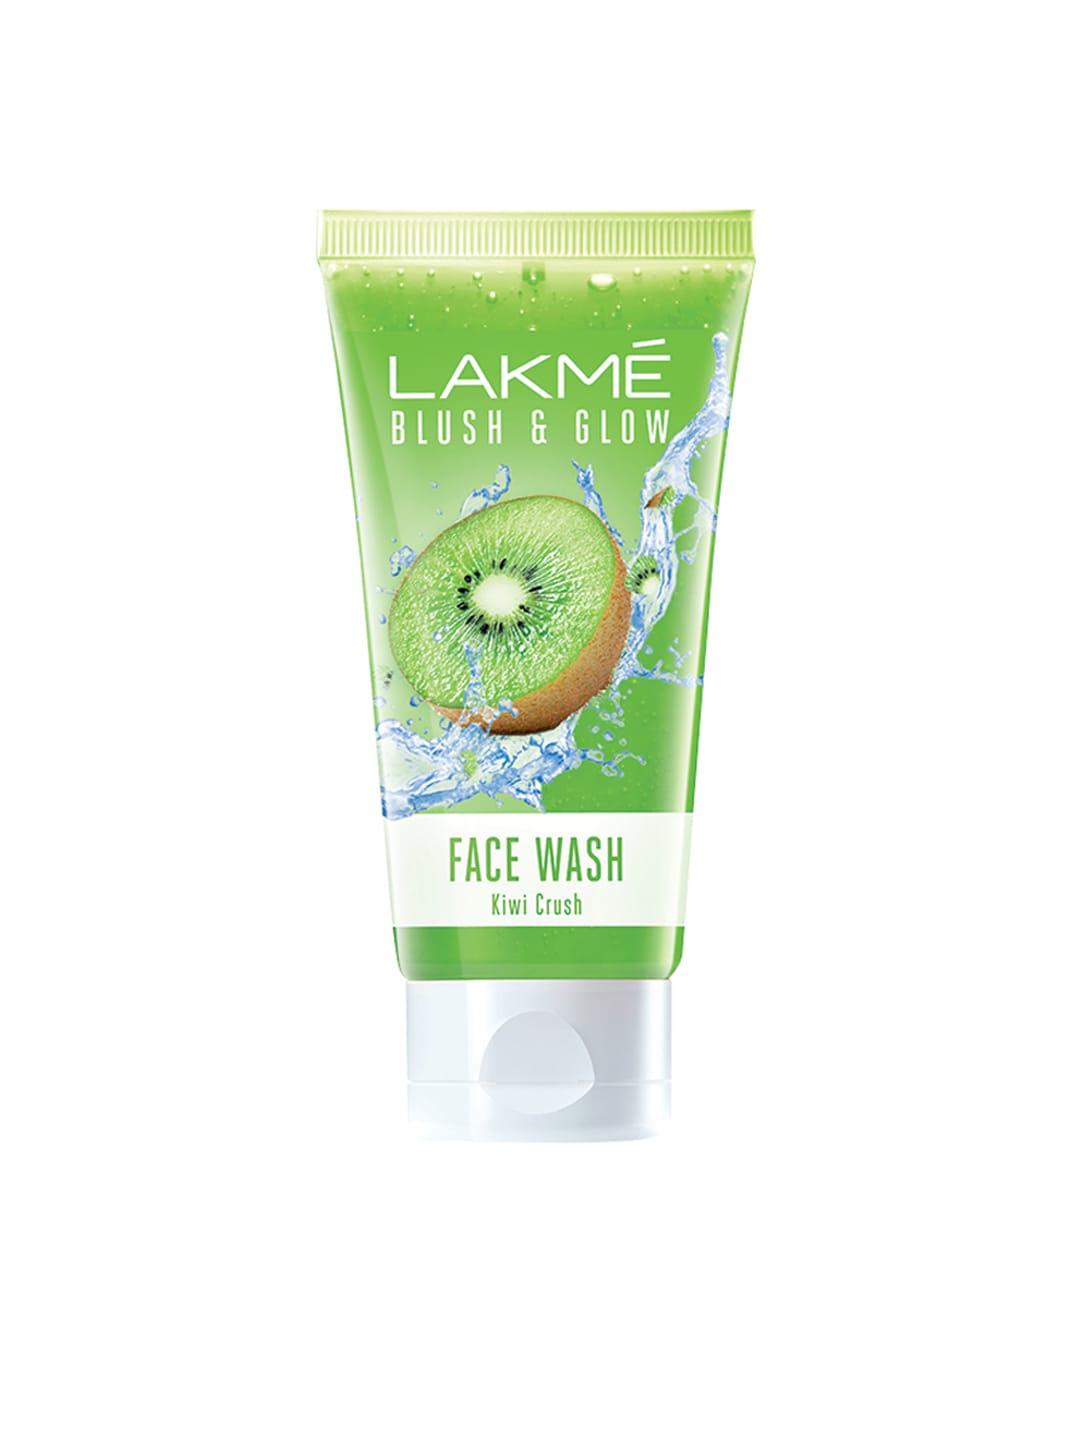 Lakme Blush & Glow Kiwi Gel Face Wash With 100% Real Kiwi Extract 100g